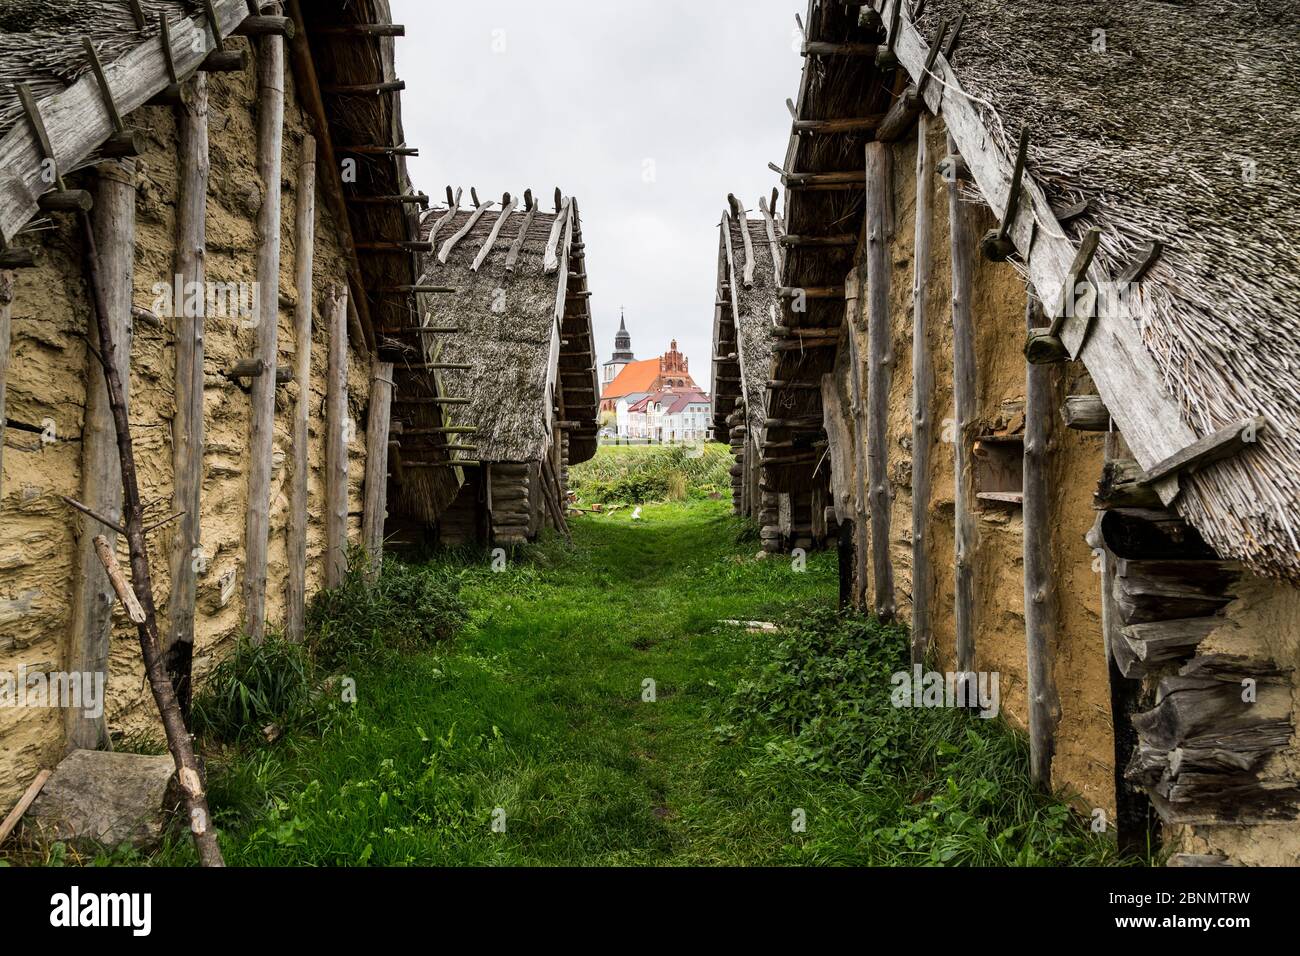 Europe, Poland, West Pomeranian Voivodeship, Slavs and Vikings’ Center in Wolin Stock Photo